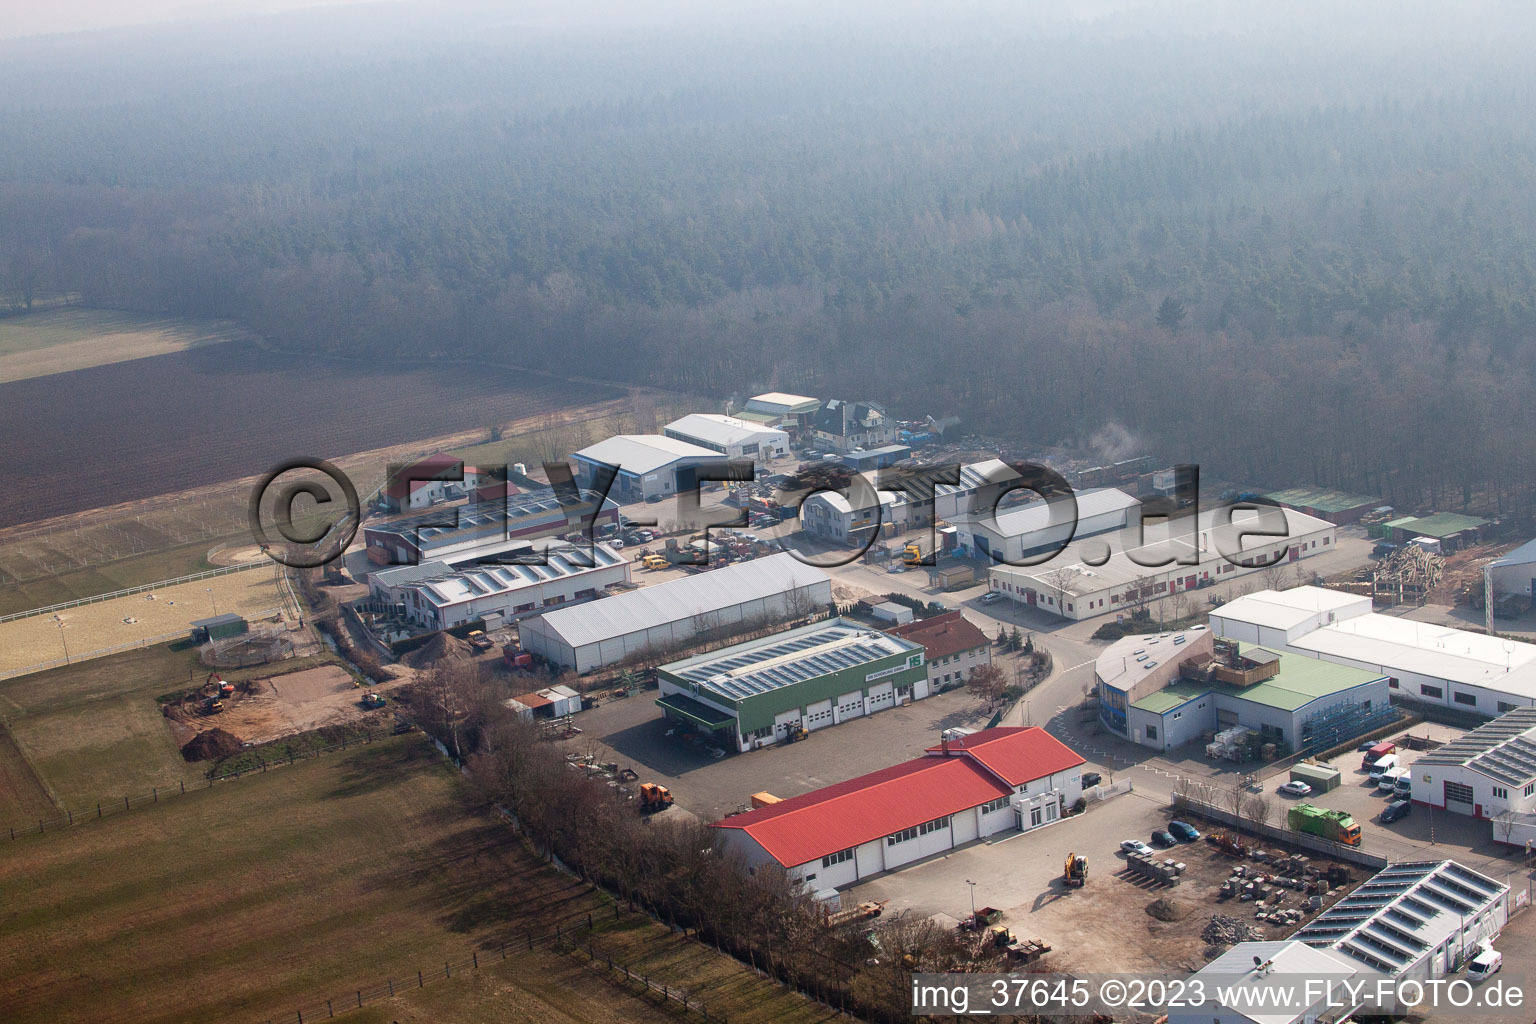 Gäxwald industrial area in the district Herxheim in Herxheim bei Landau/Pfalz in the state Rhineland-Palatinate, Germany from the plane